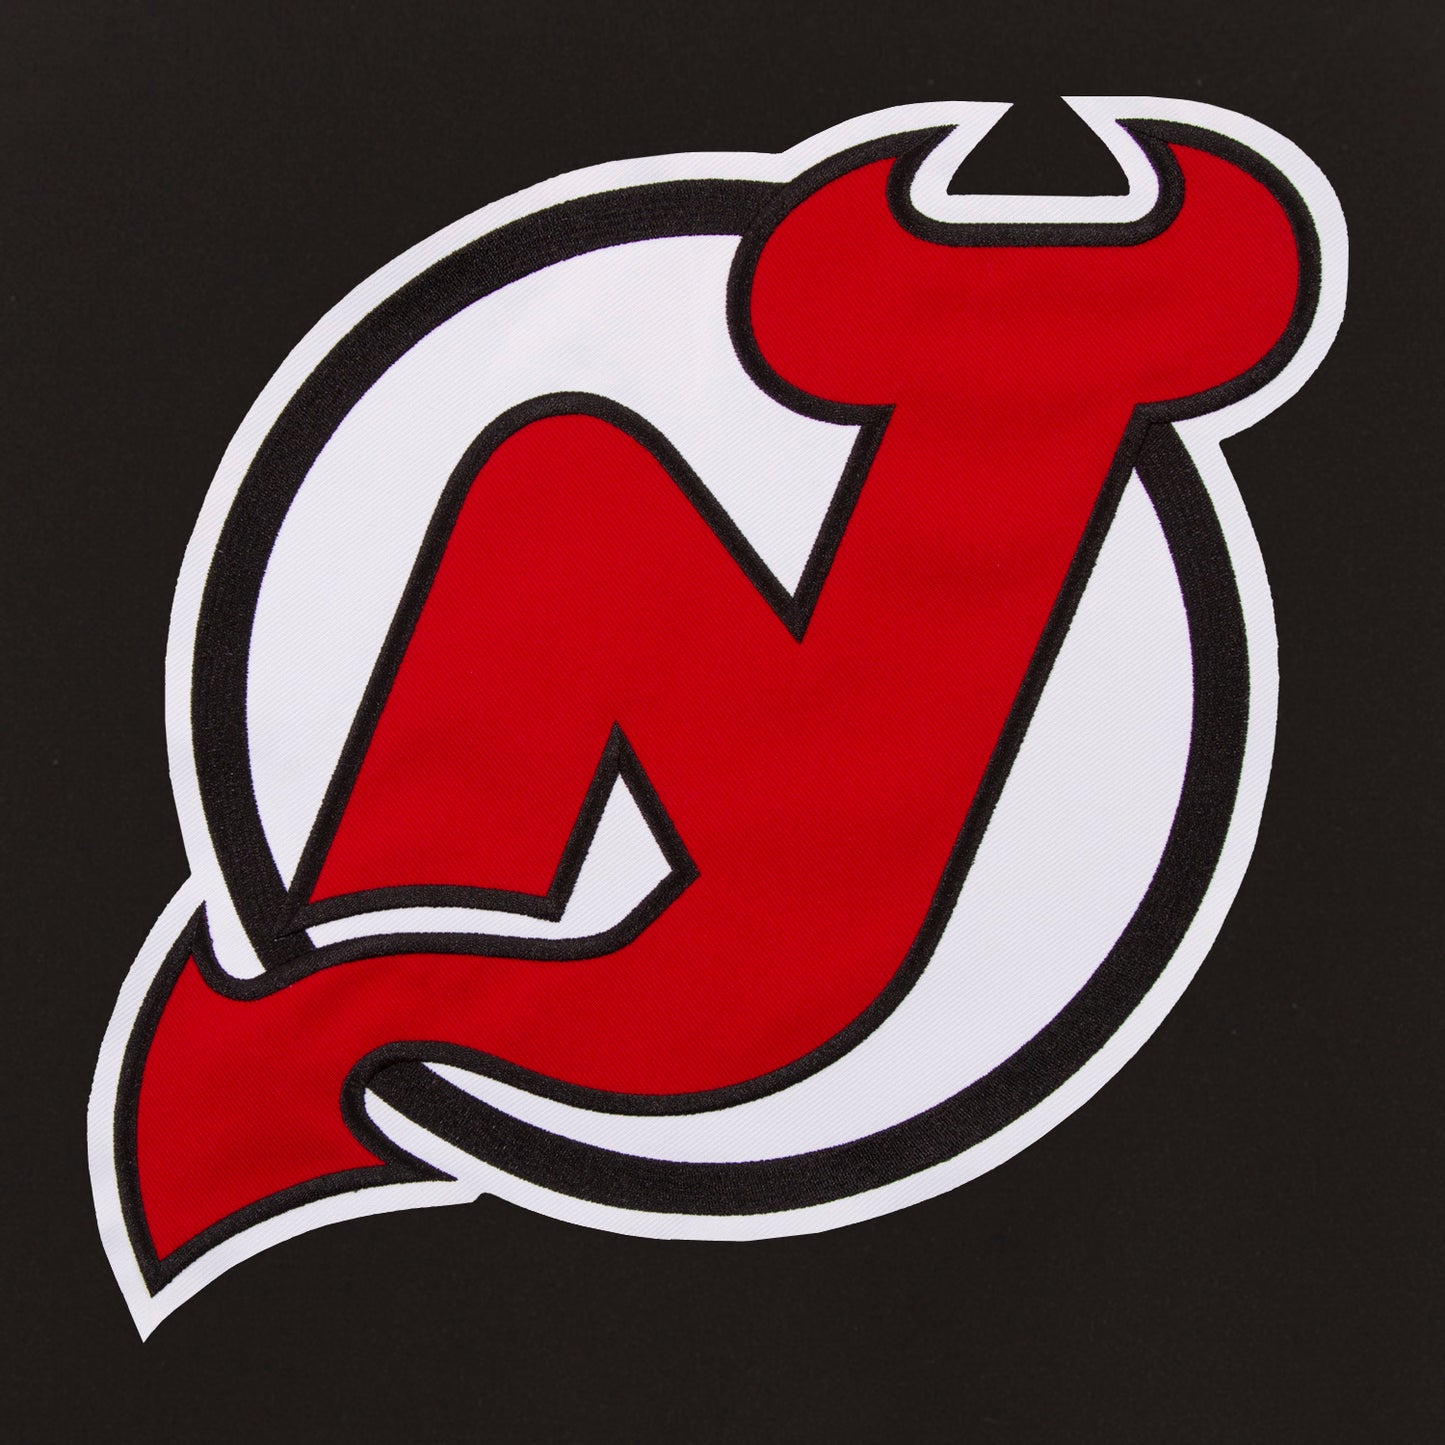 New Jersey Devils Reversible Varsity Jacket